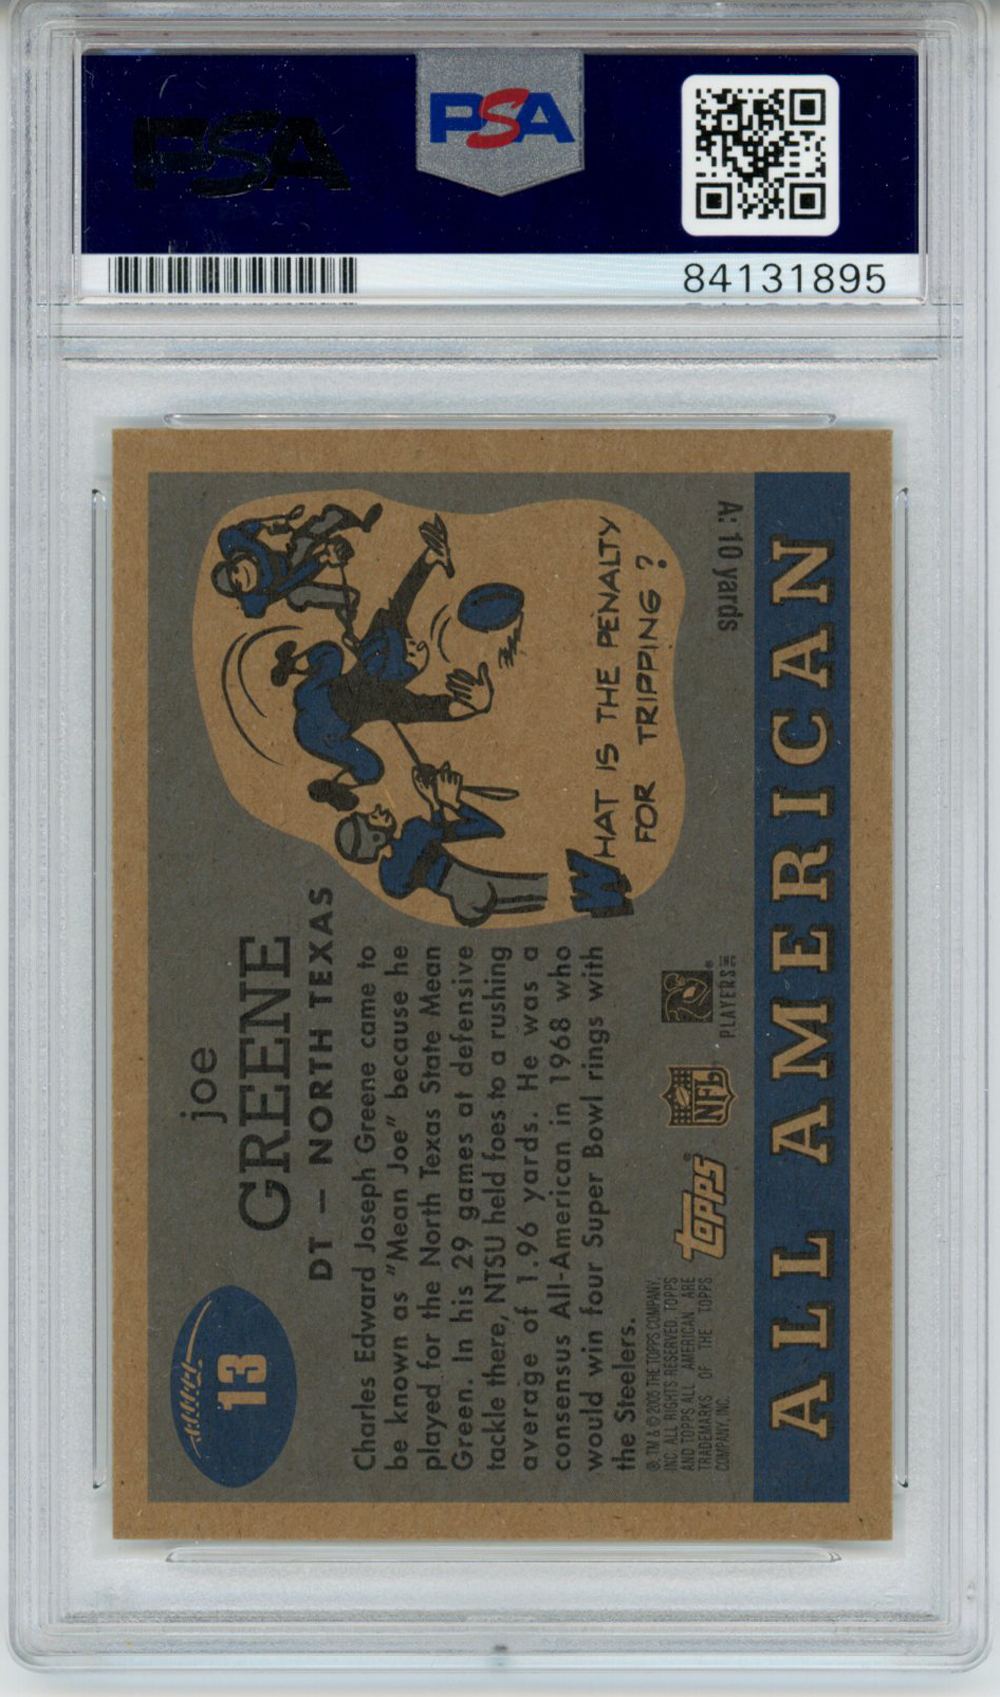 Joe Greene Autographed 2005 Topps All American Trading Card PSA Slab 32587